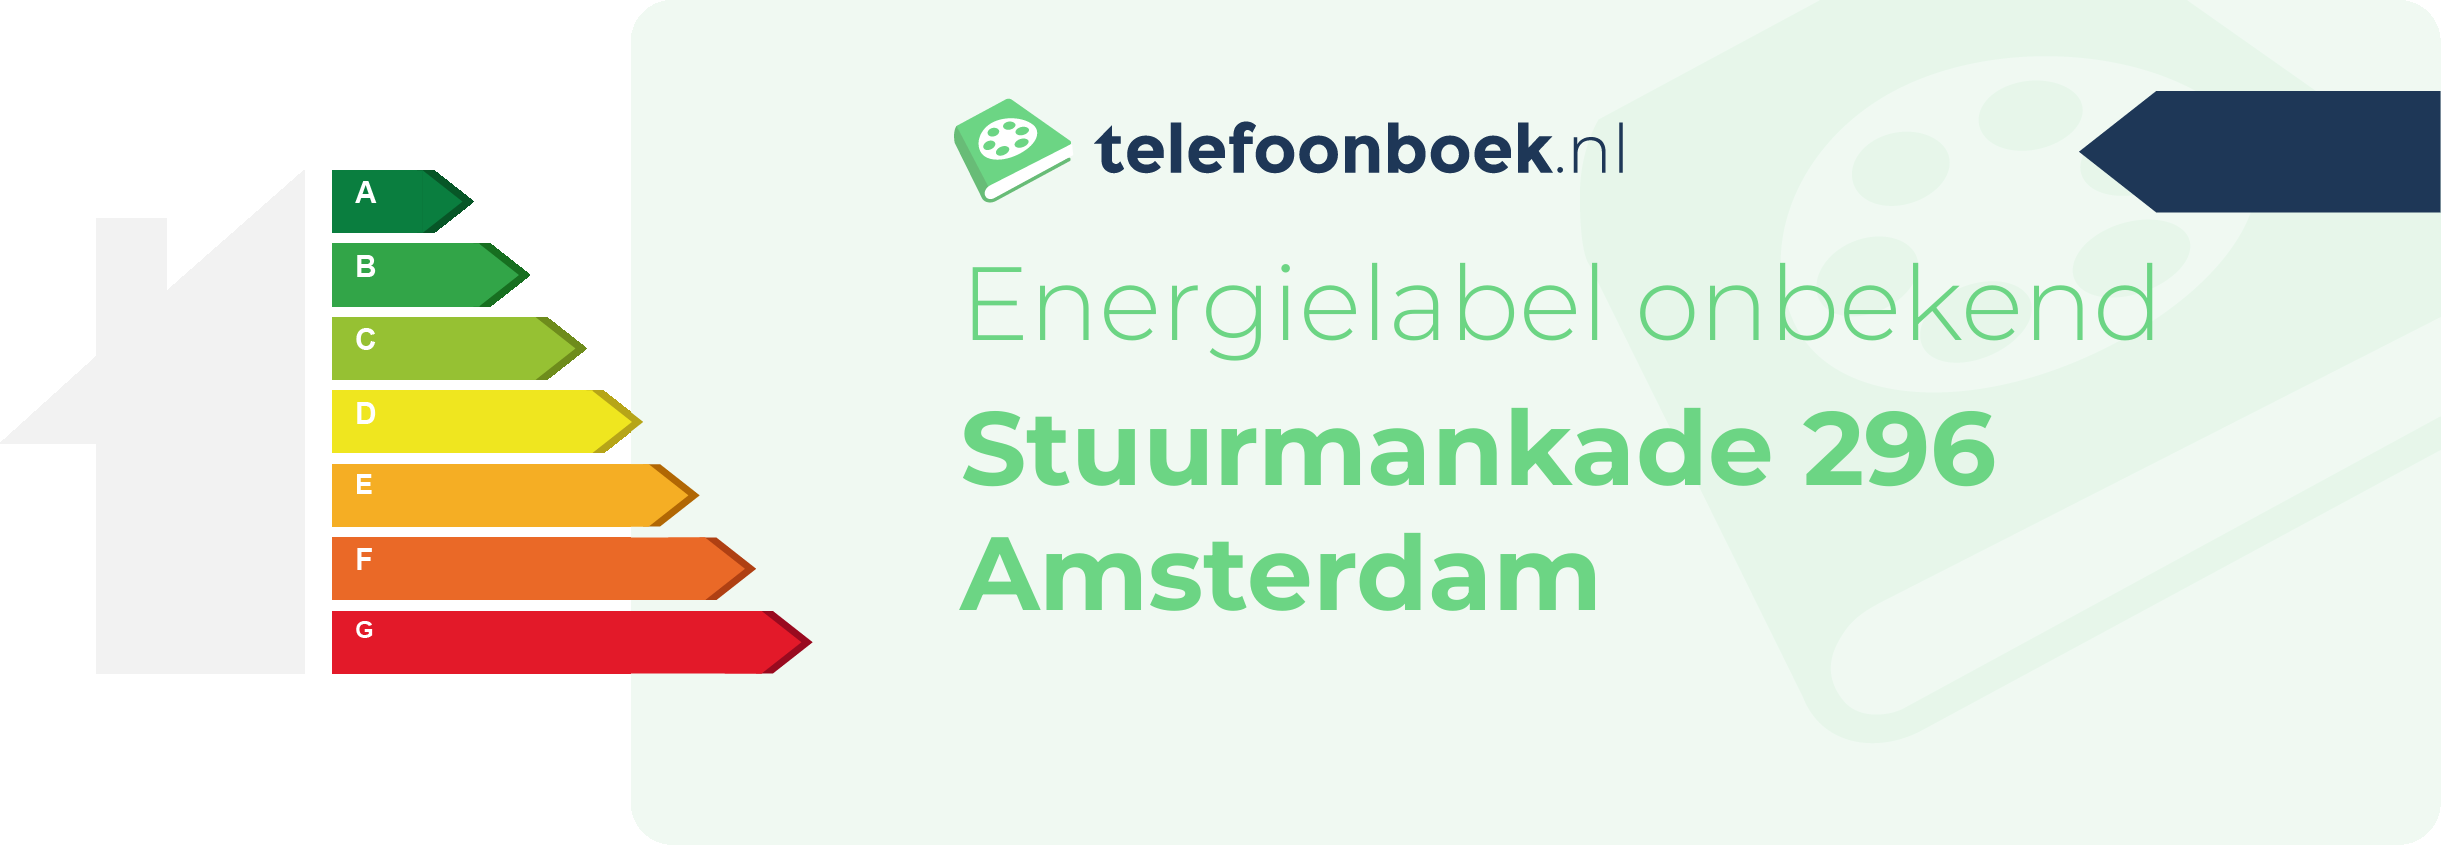 Energielabel Stuurmankade 296 Amsterdam